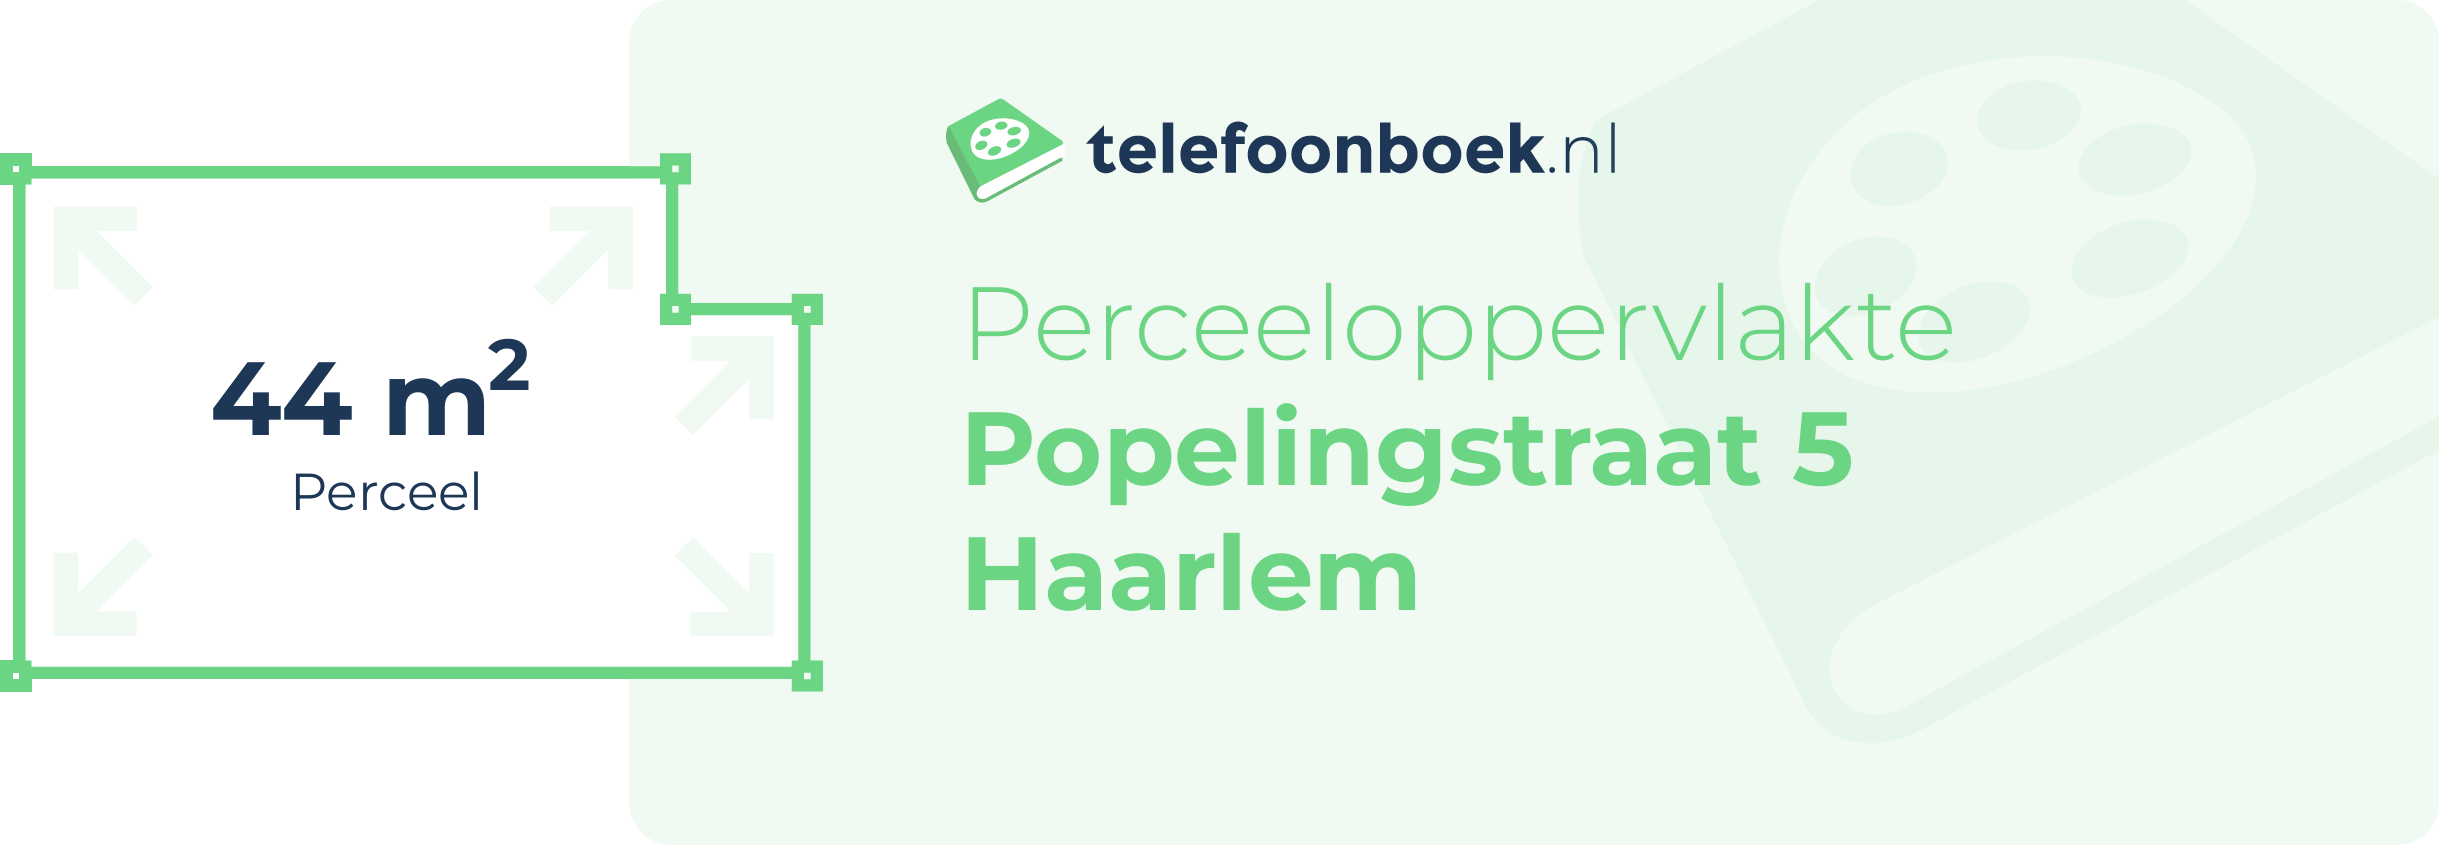 Perceeloppervlakte Popelingstraat 5 Haarlem